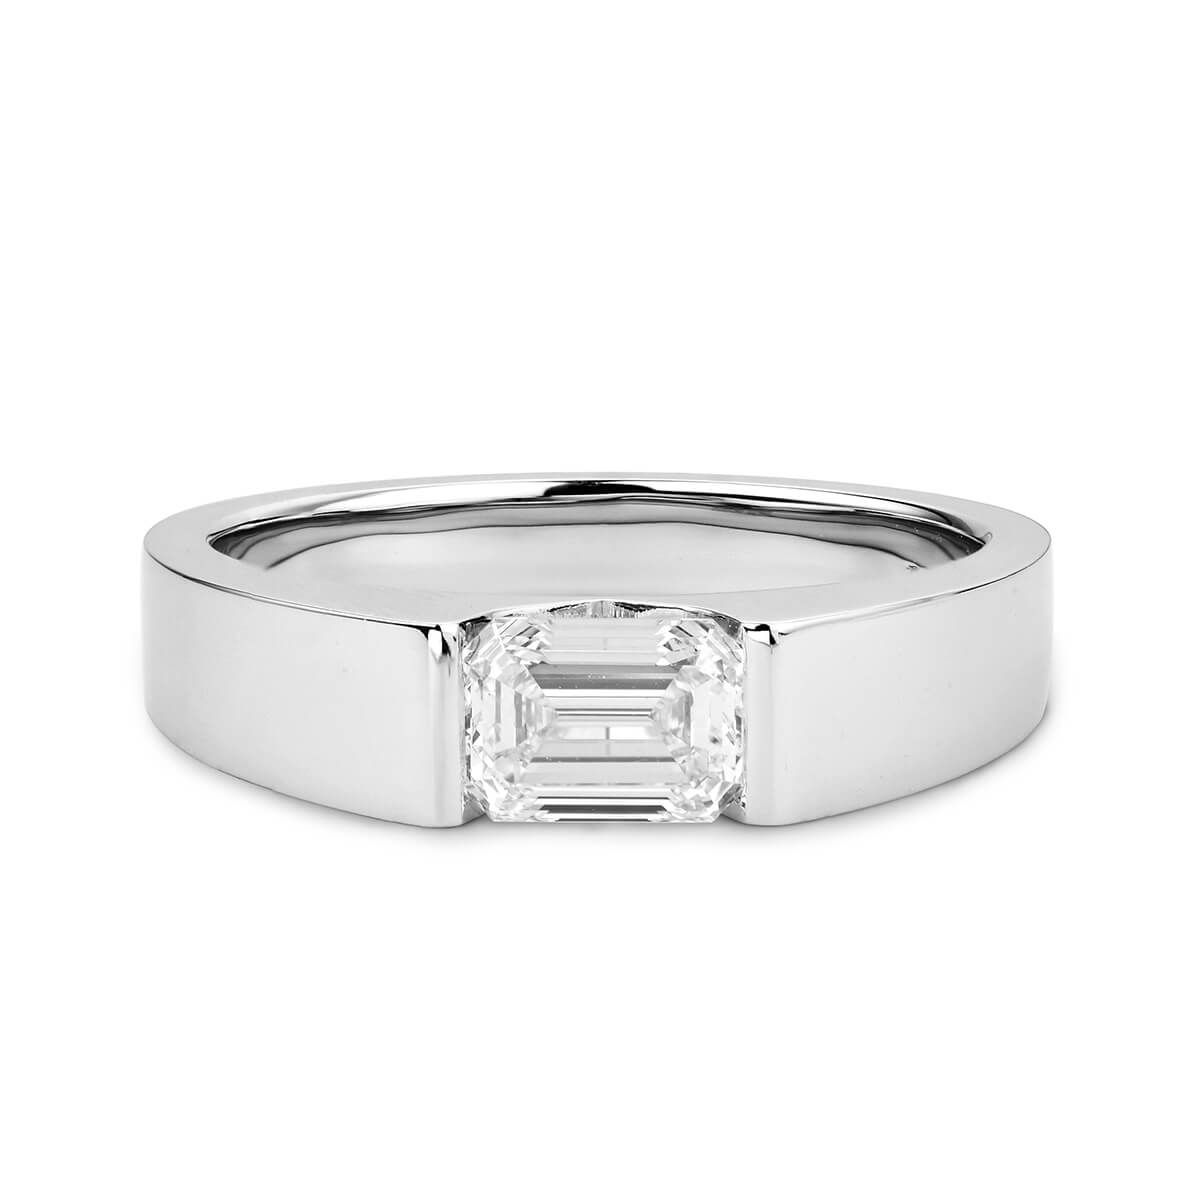  White Diamond Ring, 1.31 Ct. TW, Emerald shape, EGL IL Certified, EGLOO10170590